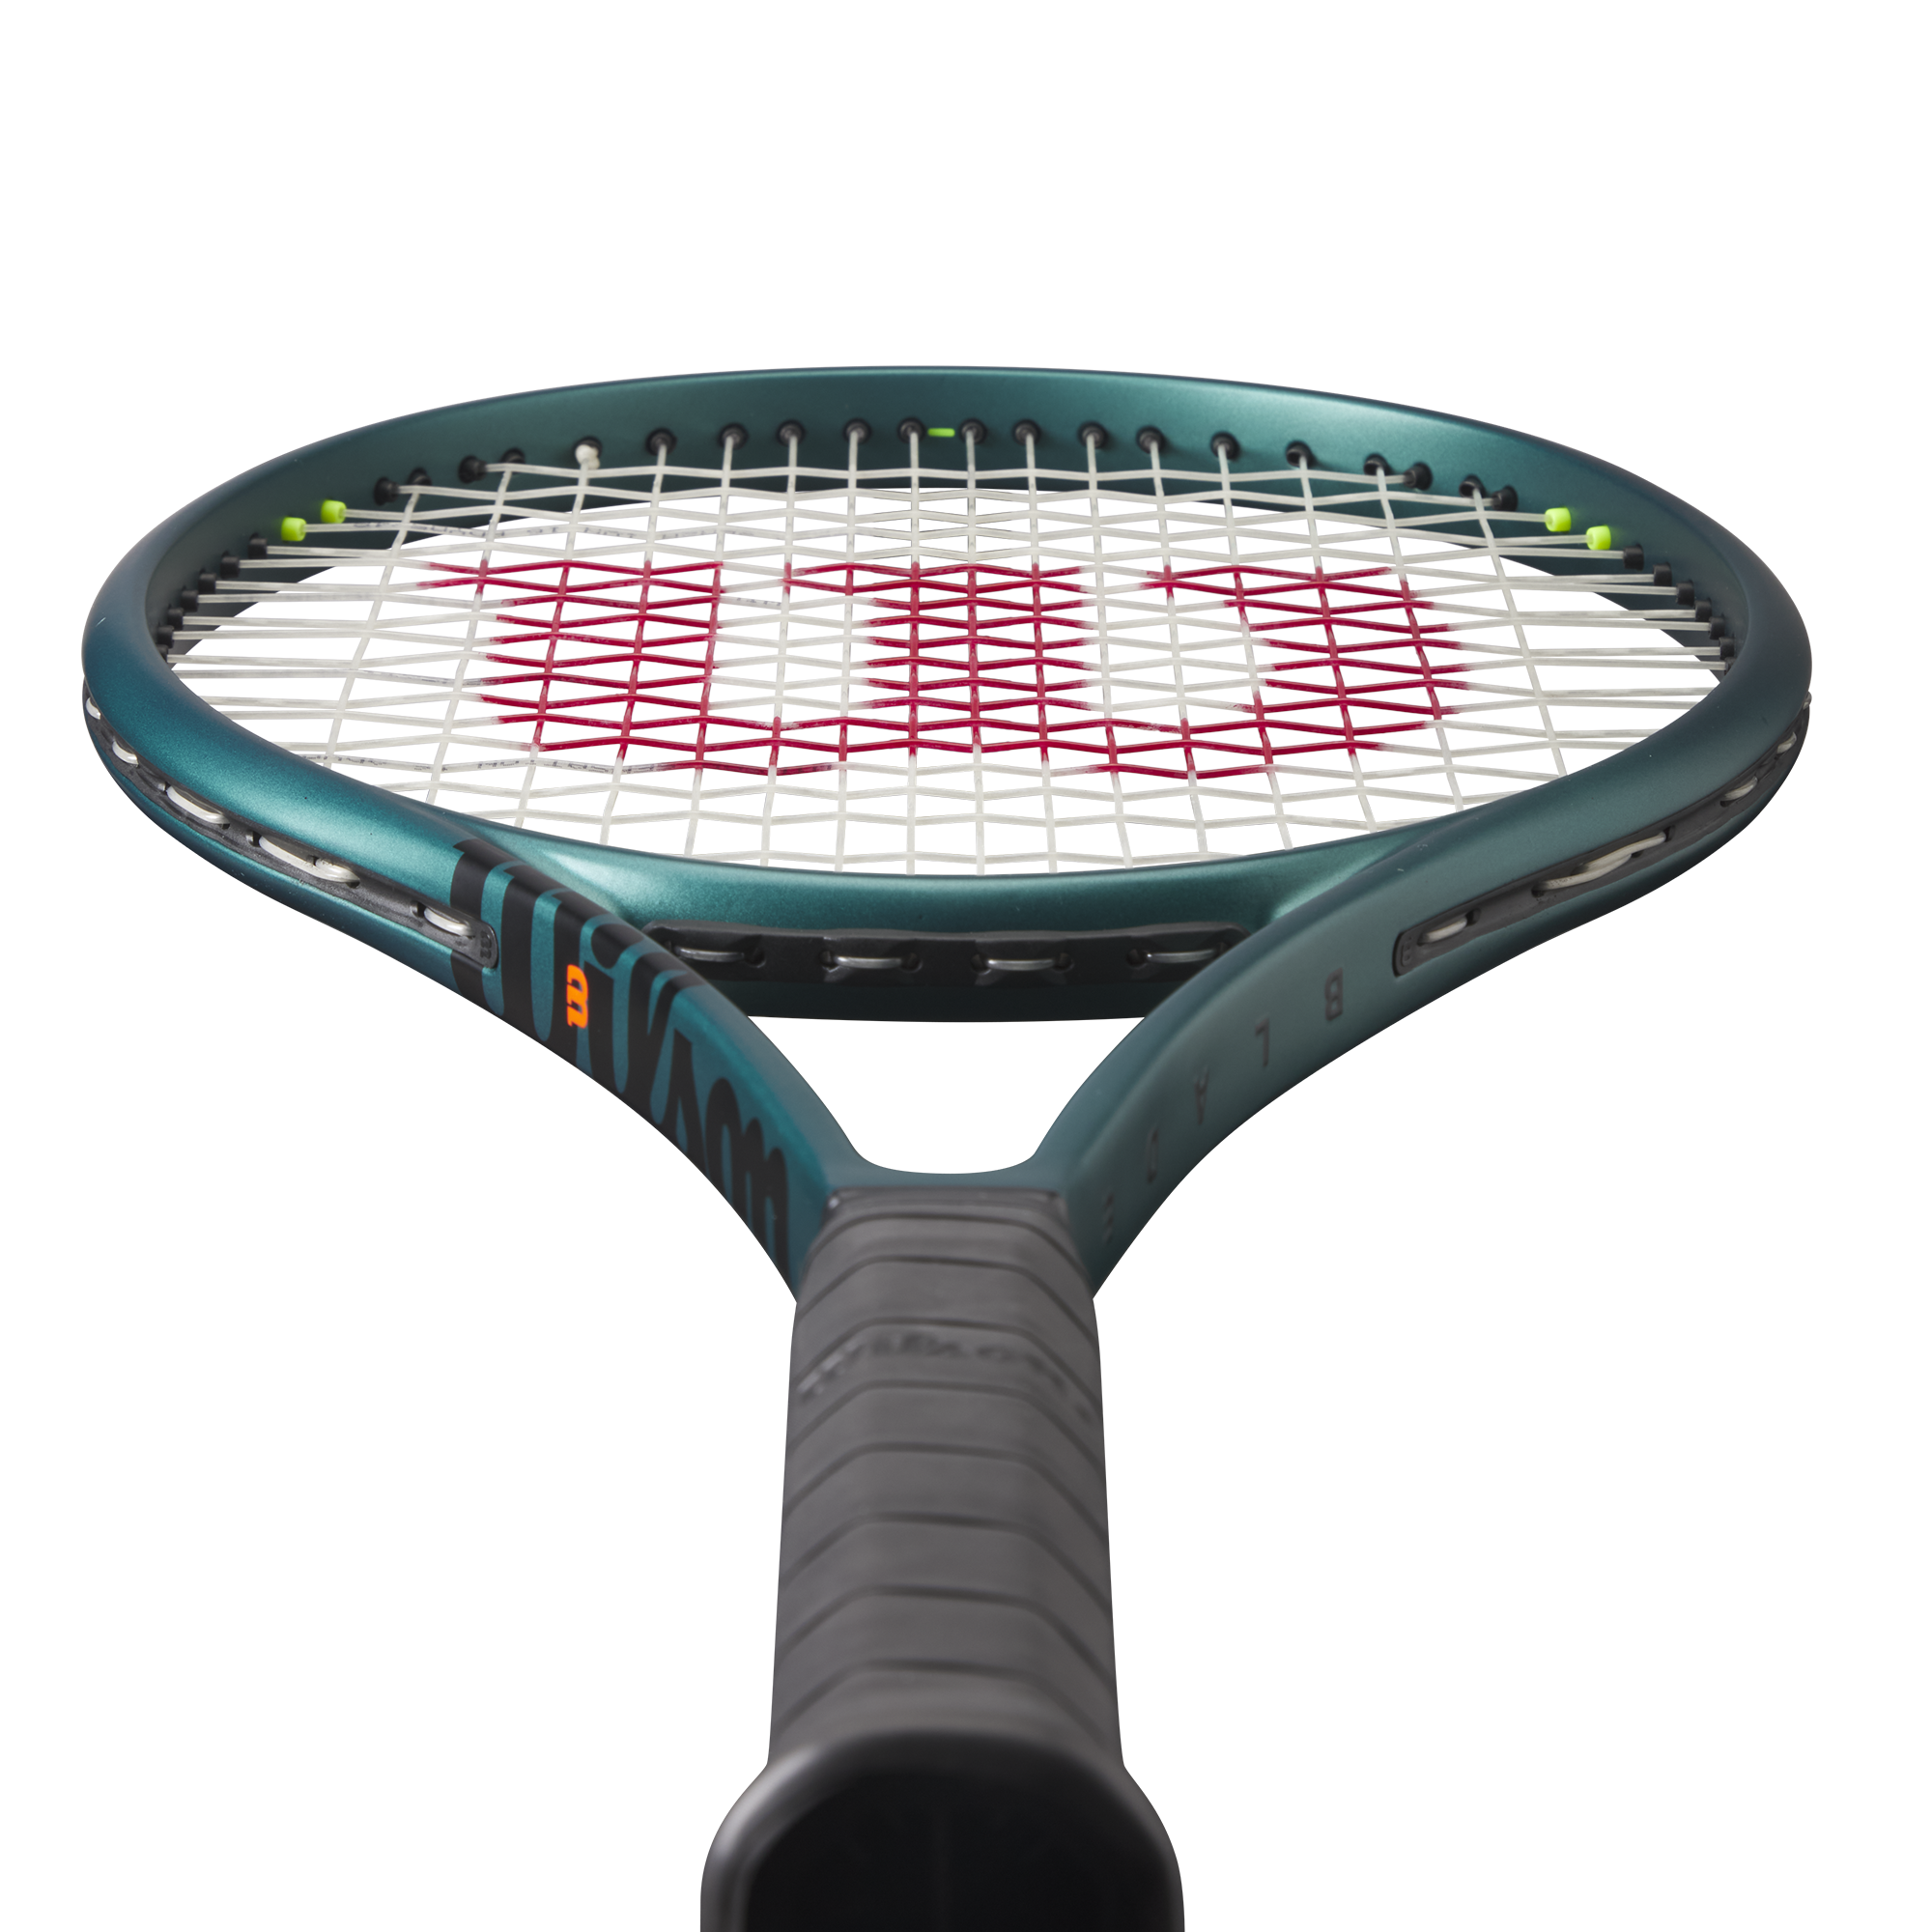 Wilson Blade 100 V9 Tennis Racket